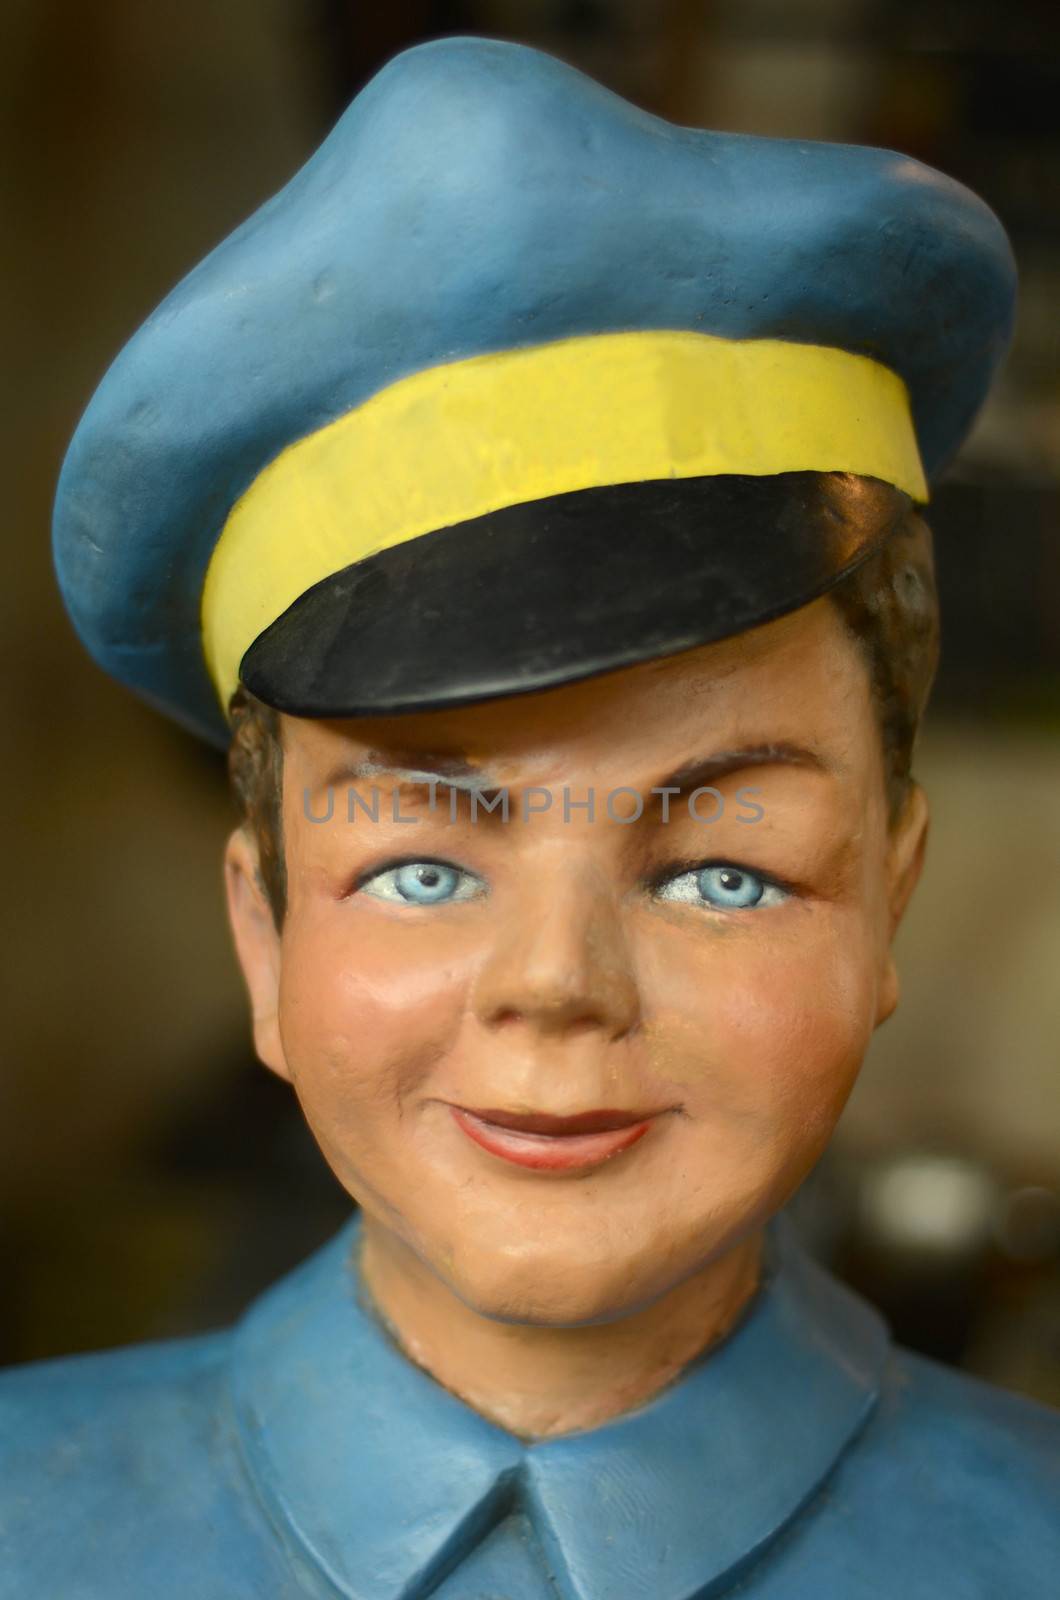 Vintage Model Of Boy by mrdoomits